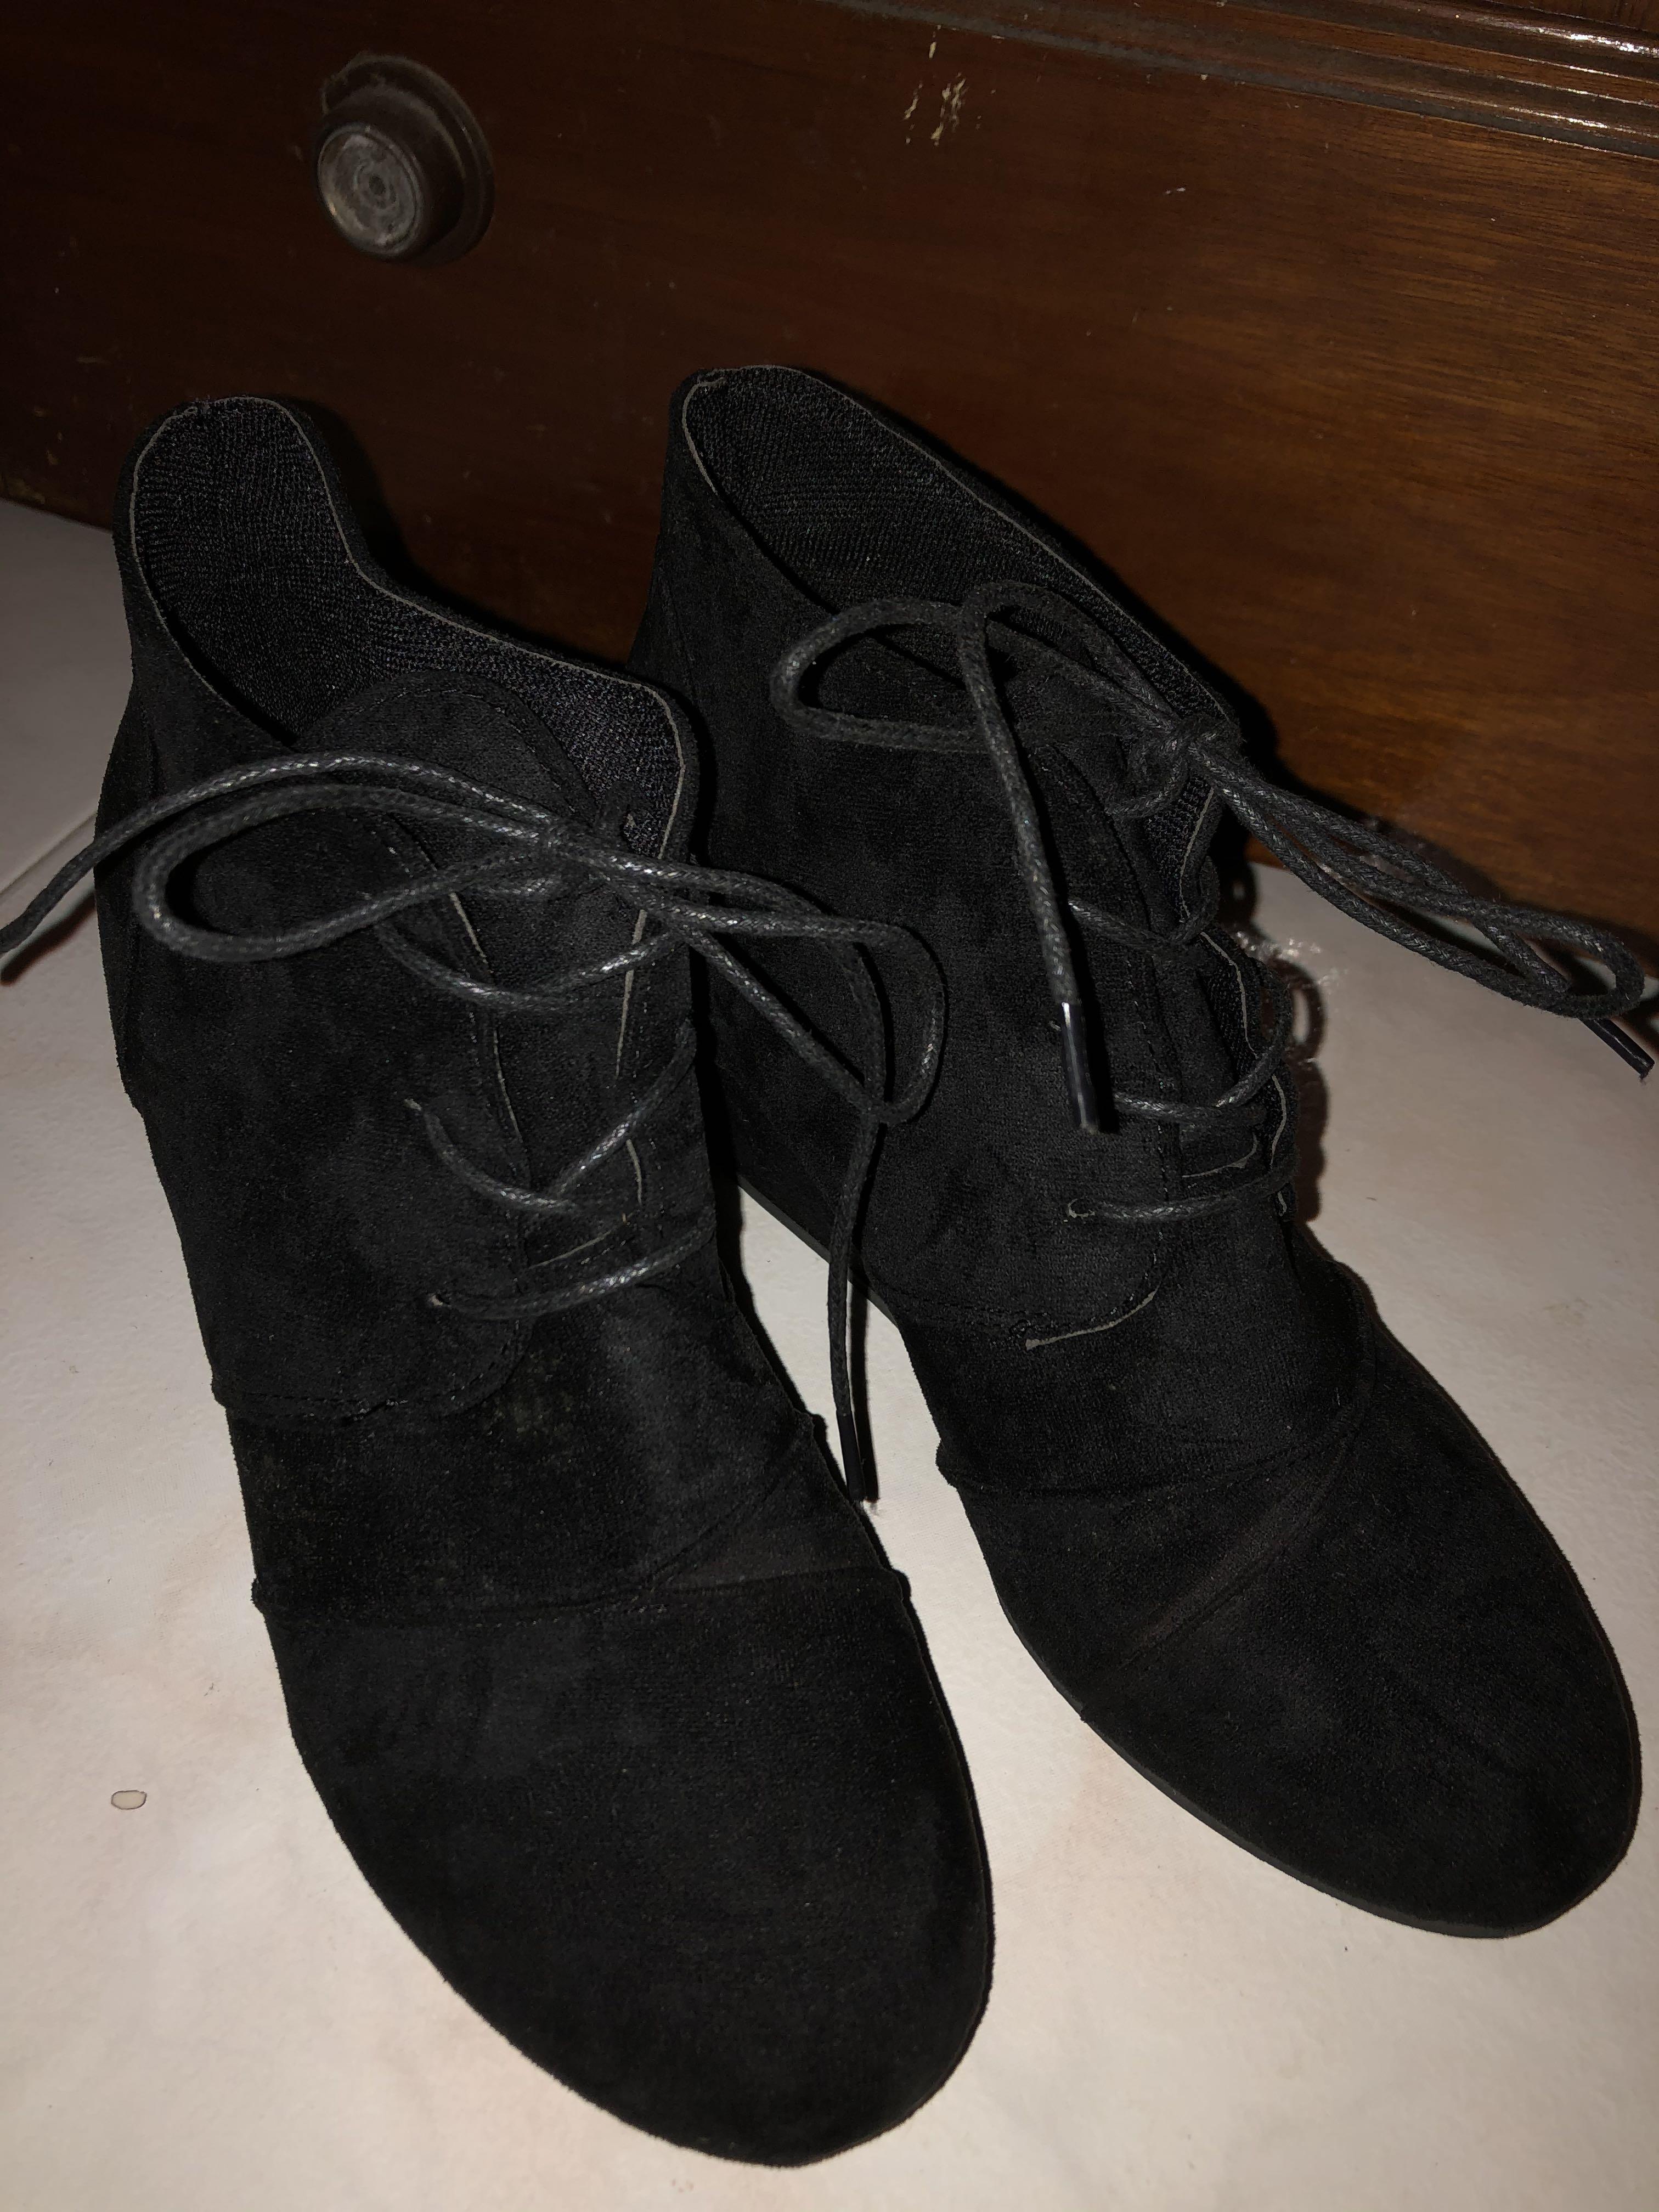 cute black round toe boots/heels/wedges 